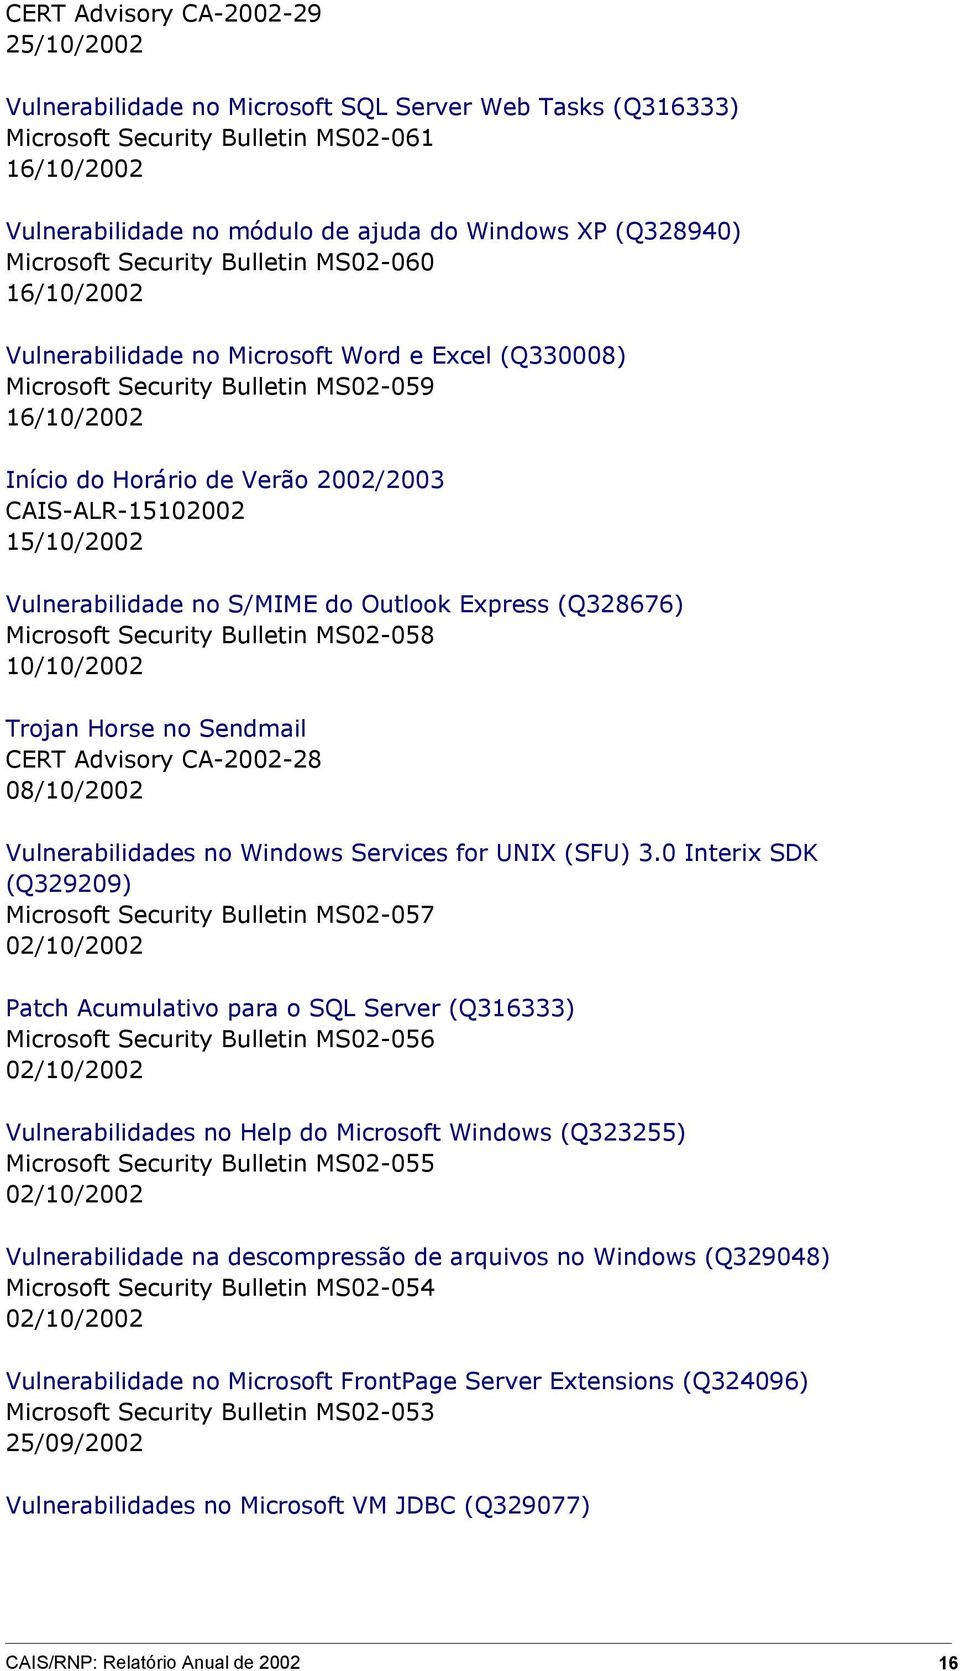 CAIS-ALR-15102002 15/10/2002 Vulnerabilidade no S/MIME do Outlook Express (Q328676) Microsoft Security Bulletin MS02-058 10/10/2002 Trojan Horse no Sendmail CERT Advisory CA-2002-28 08/10/2002